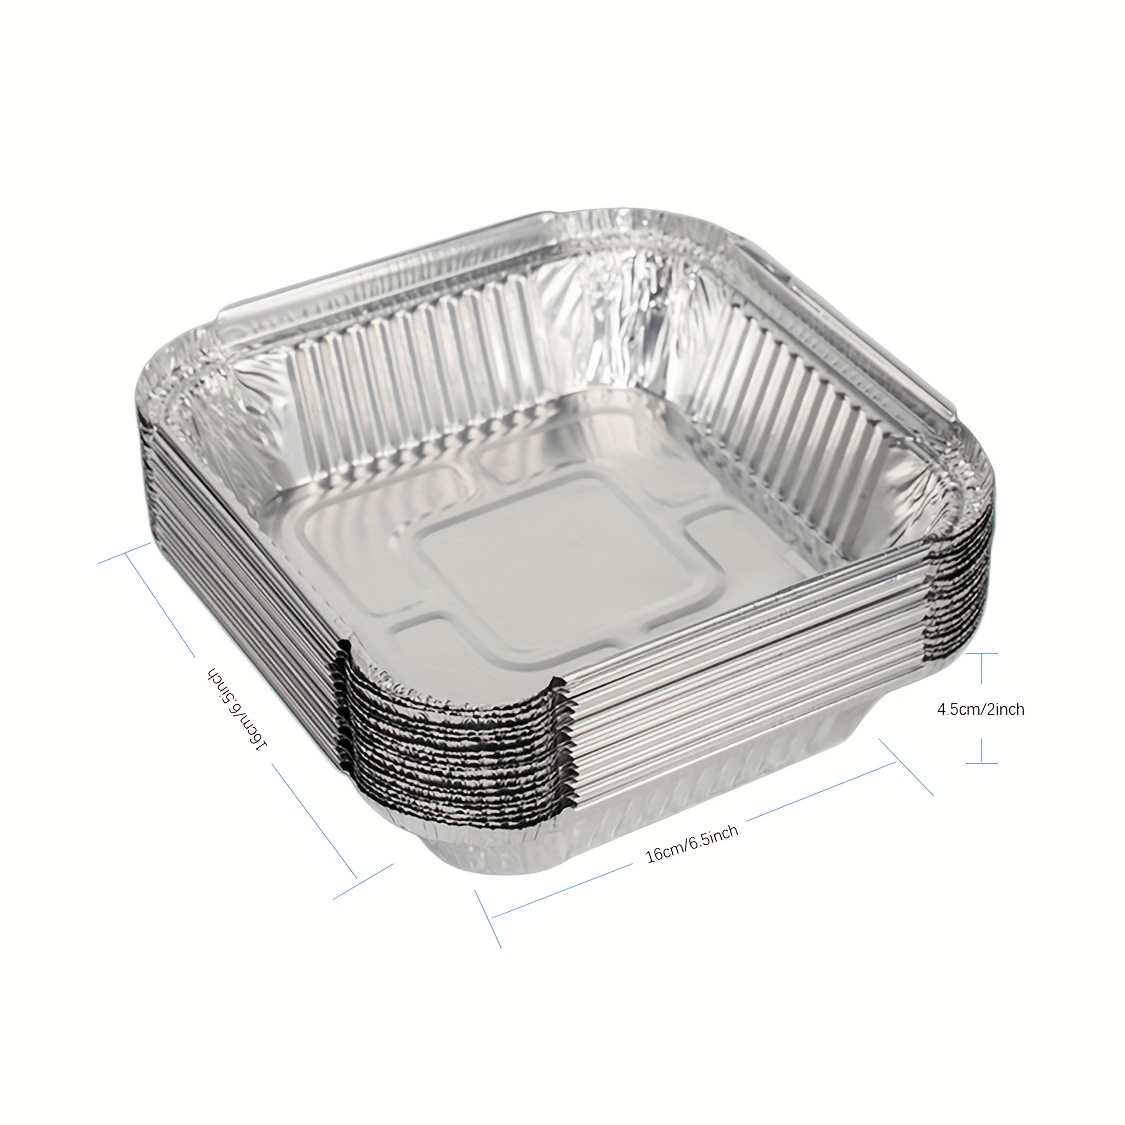 8X8 Square Aluminum Foil Food Grade Pans with Lids from China manufacturer  - Longstar aluminum foil